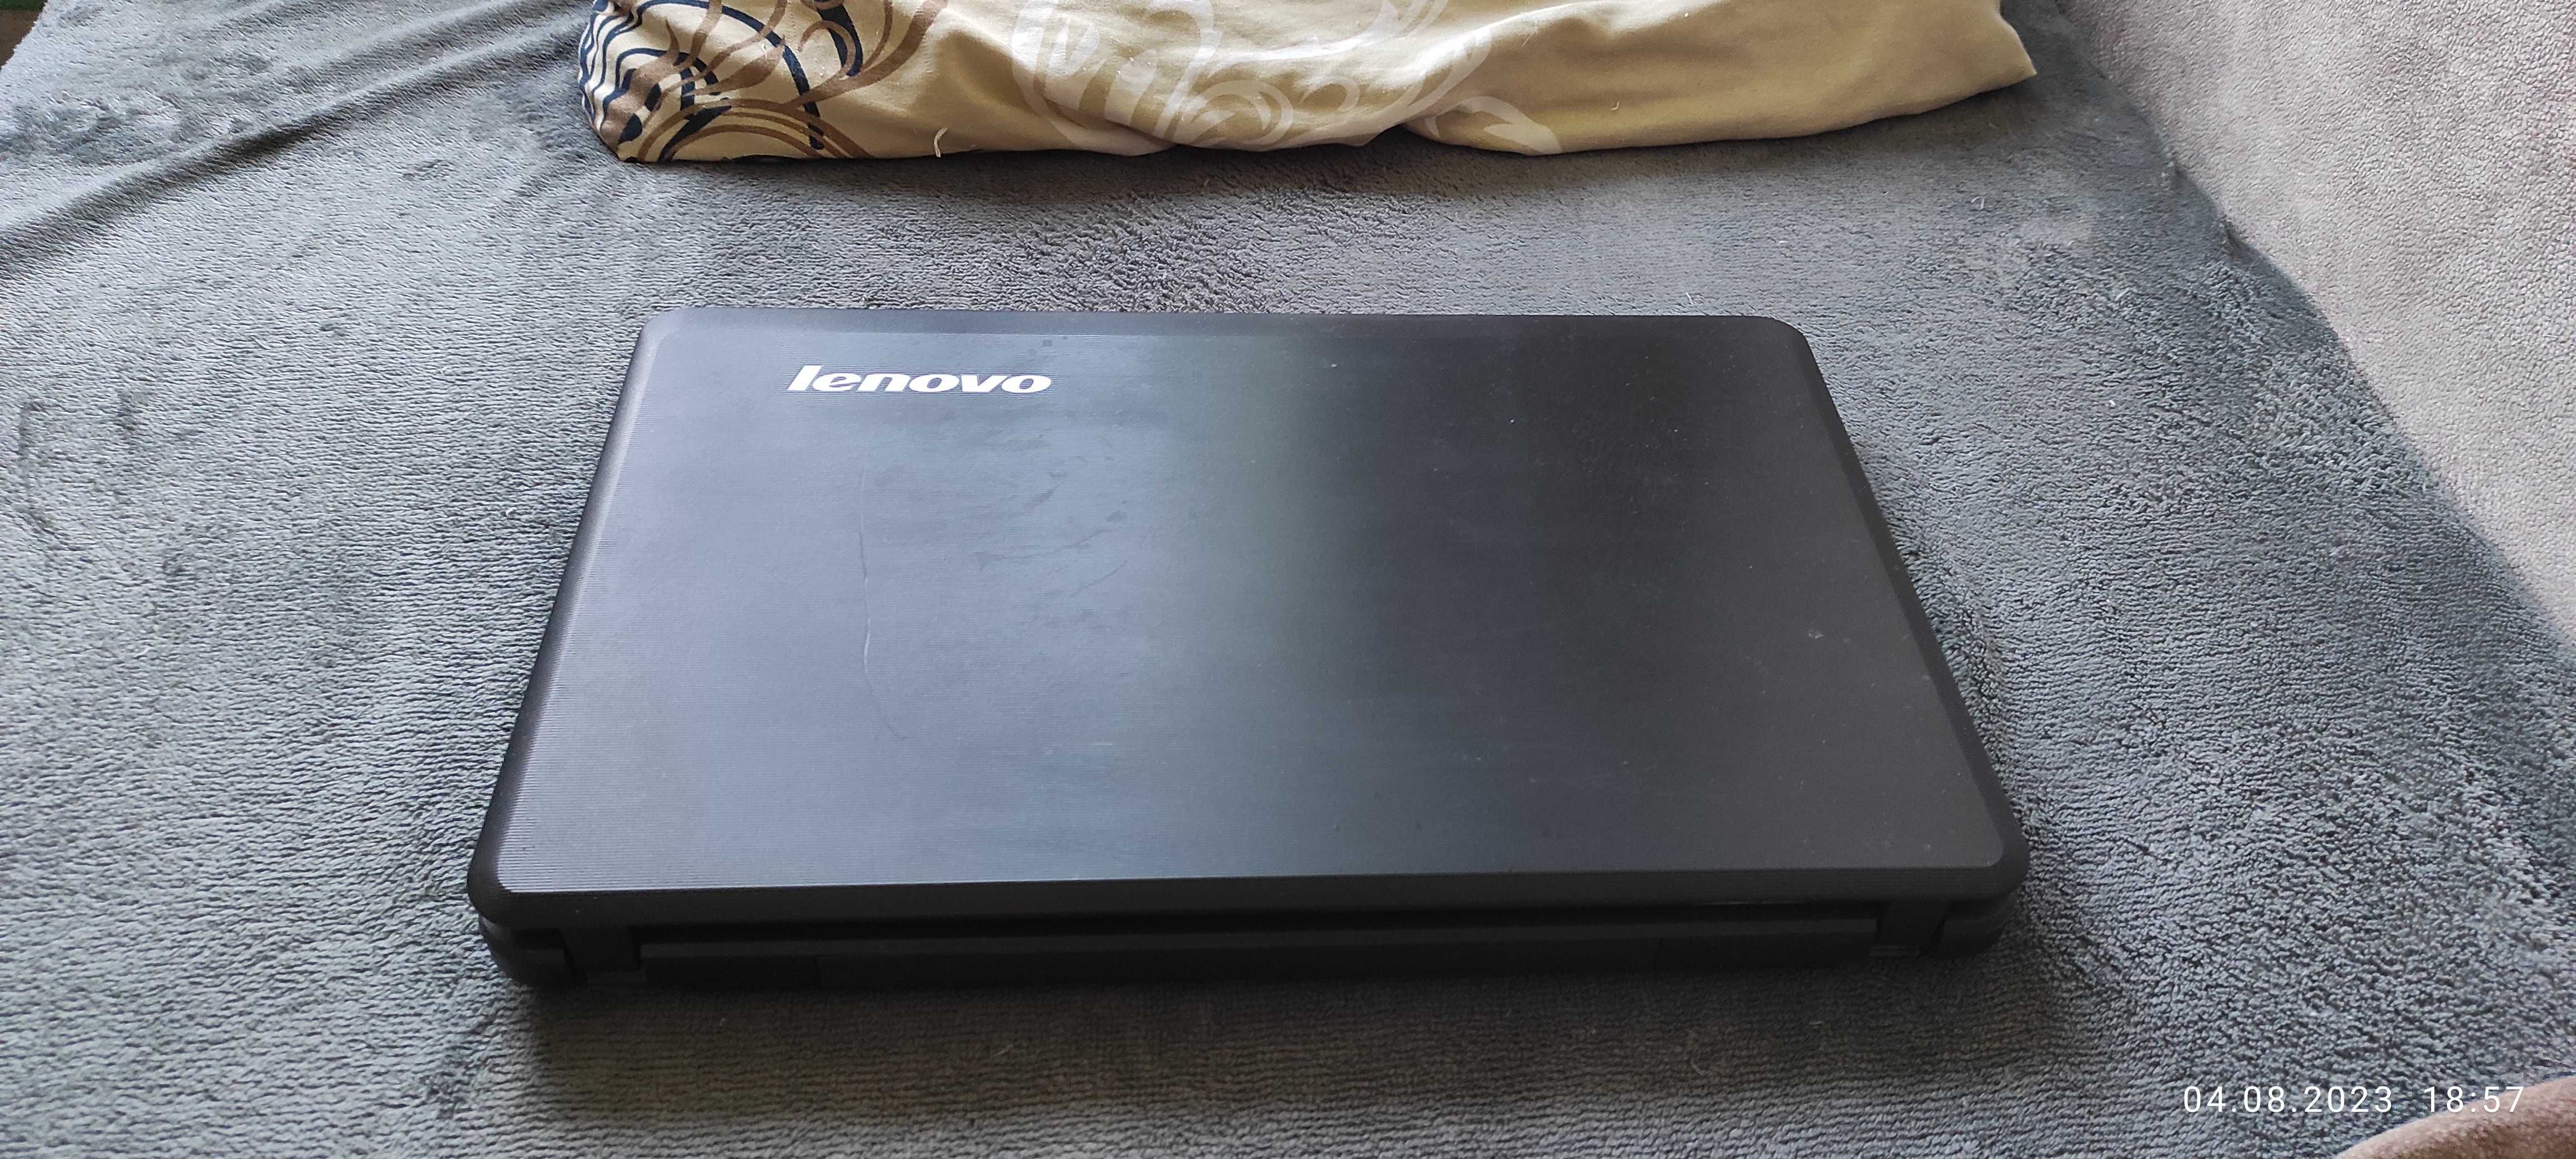 Ноутбук Lenovo B550 б/у